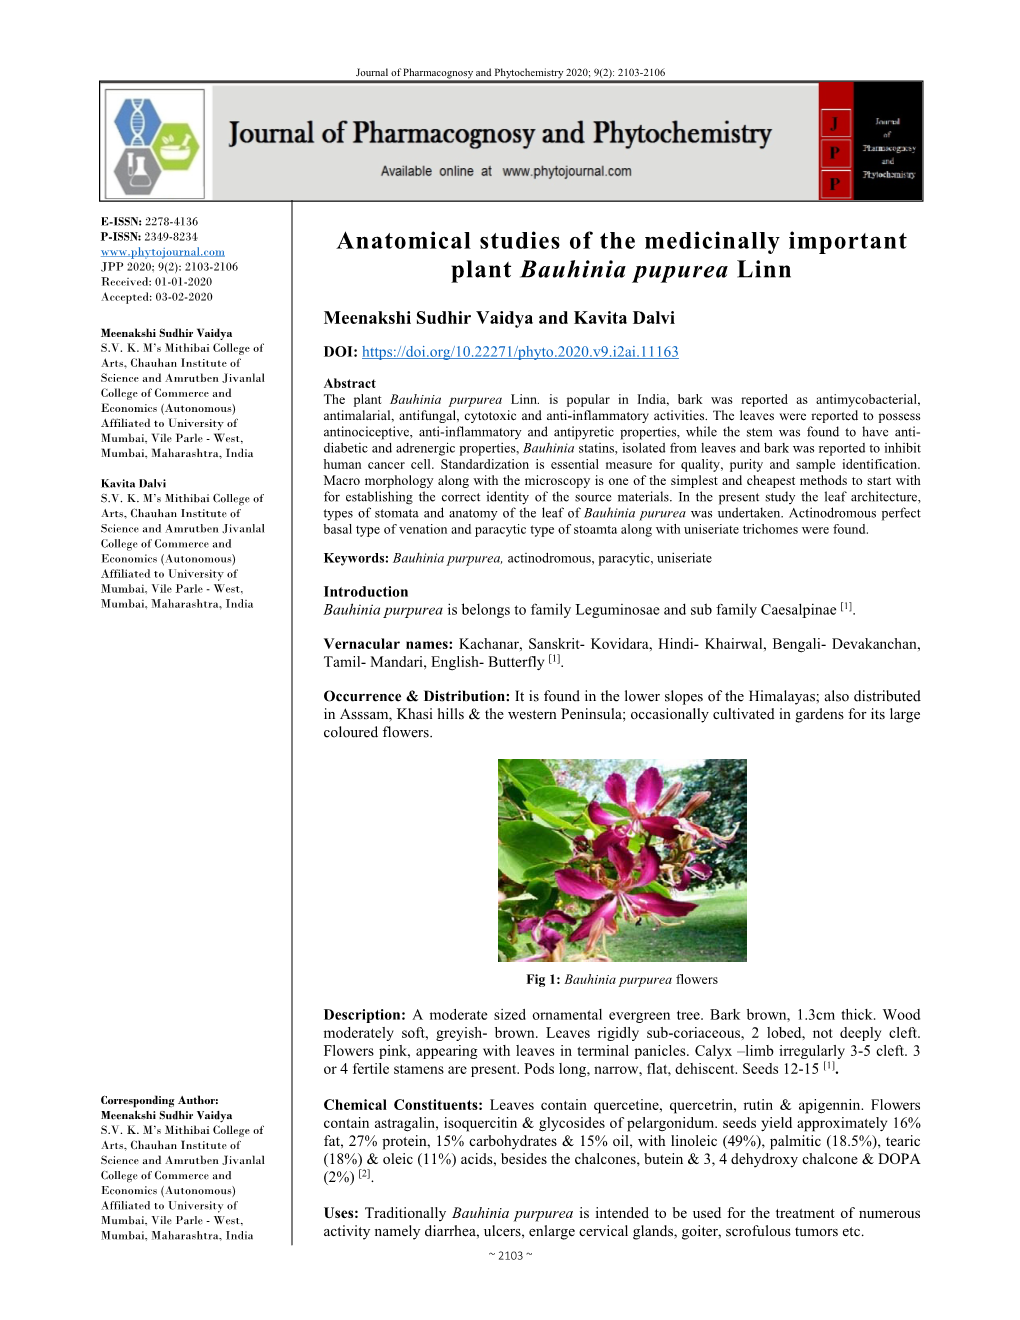 Anatomical Studies of the Medicinally Important Plant Bauhinia Pupurea Linn